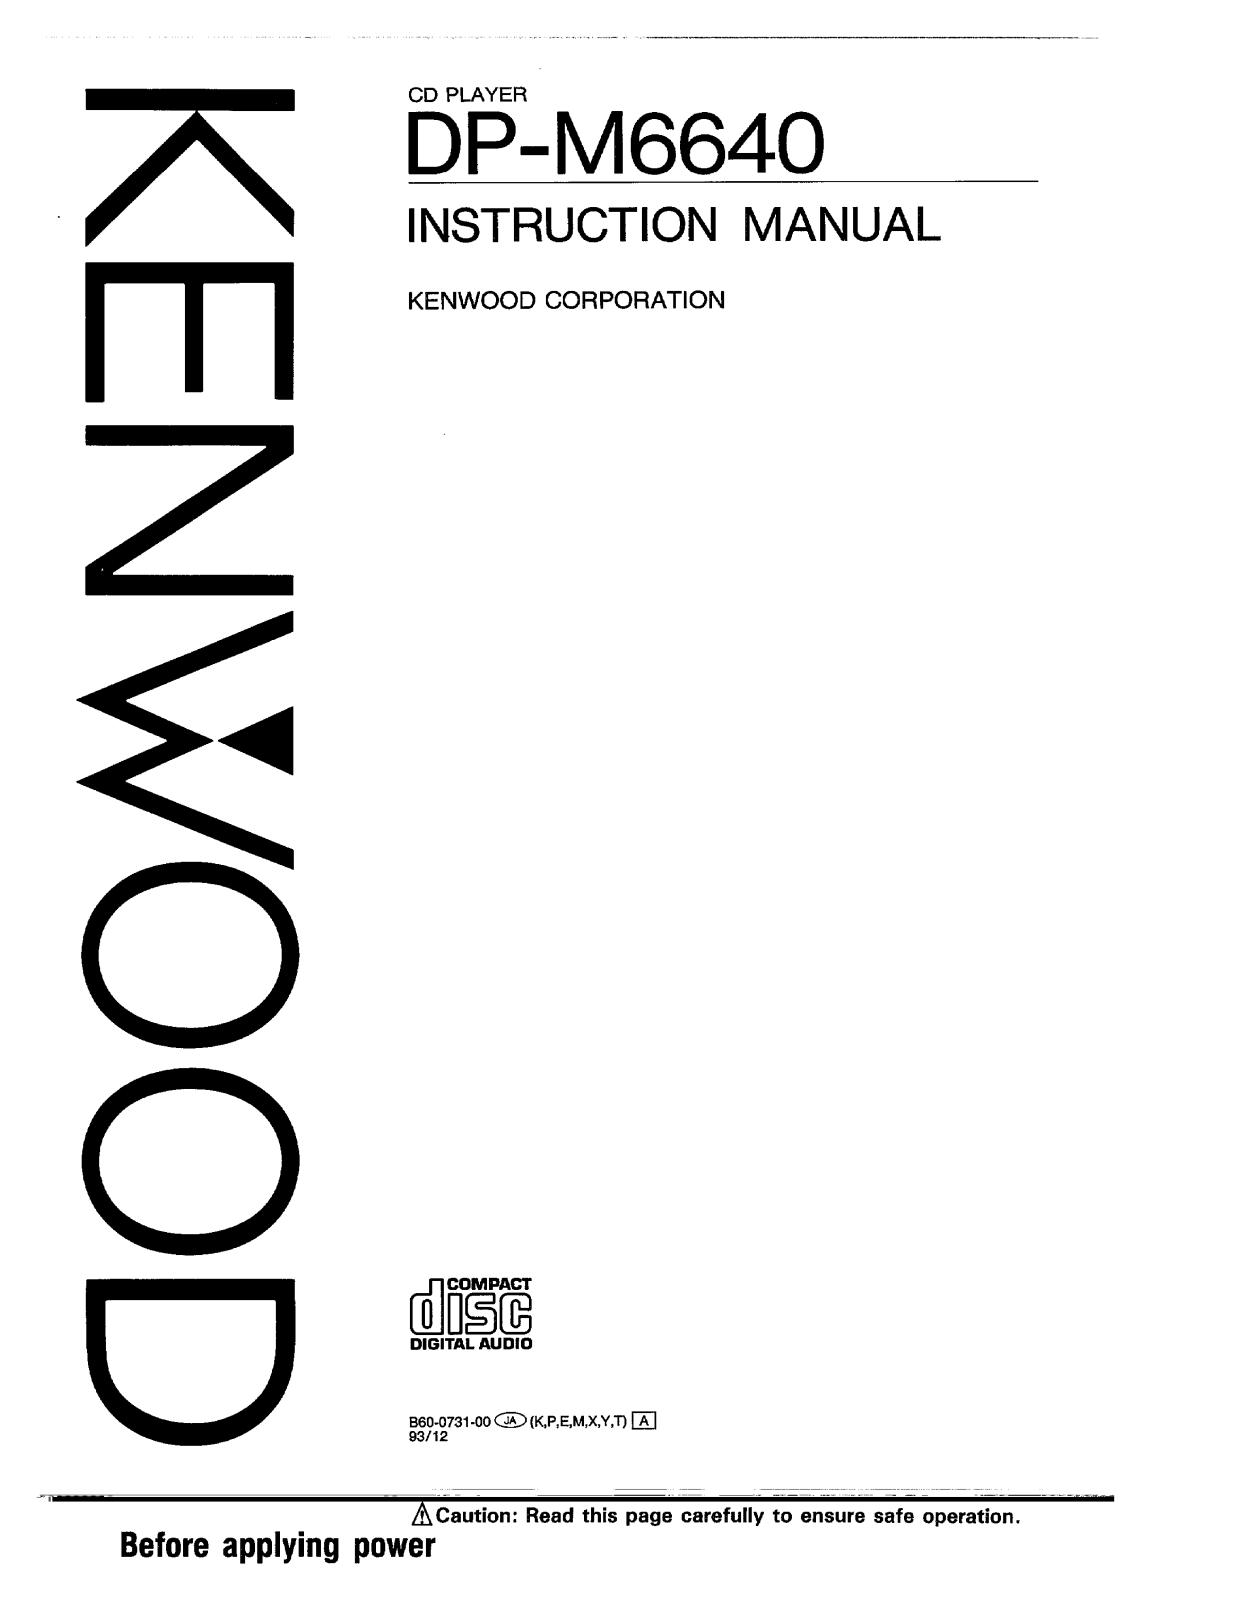 Kenwood DP-M6640 Owner's Manual